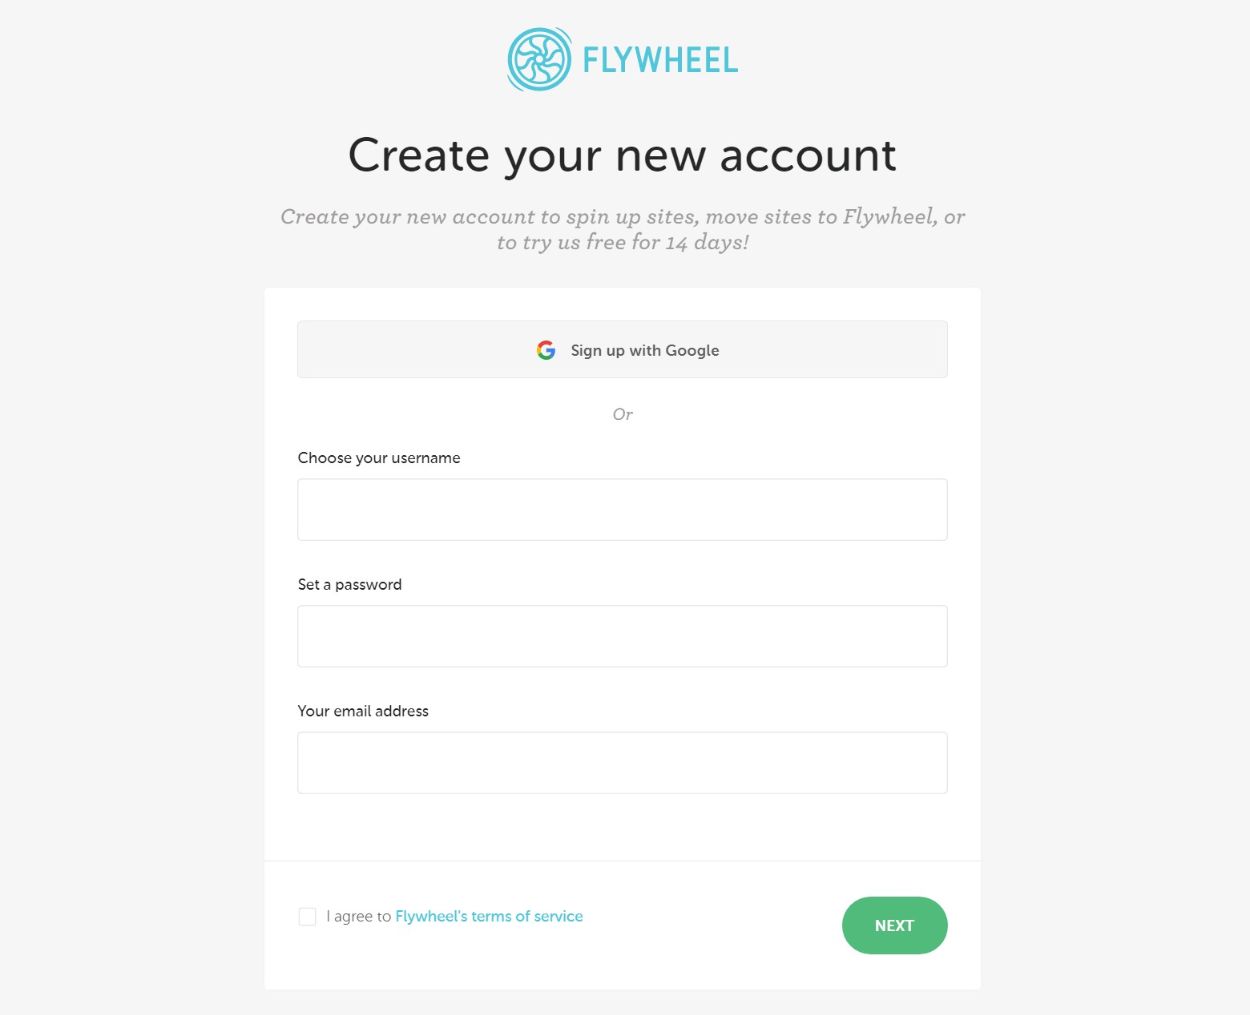 Enter Flywheel profile information